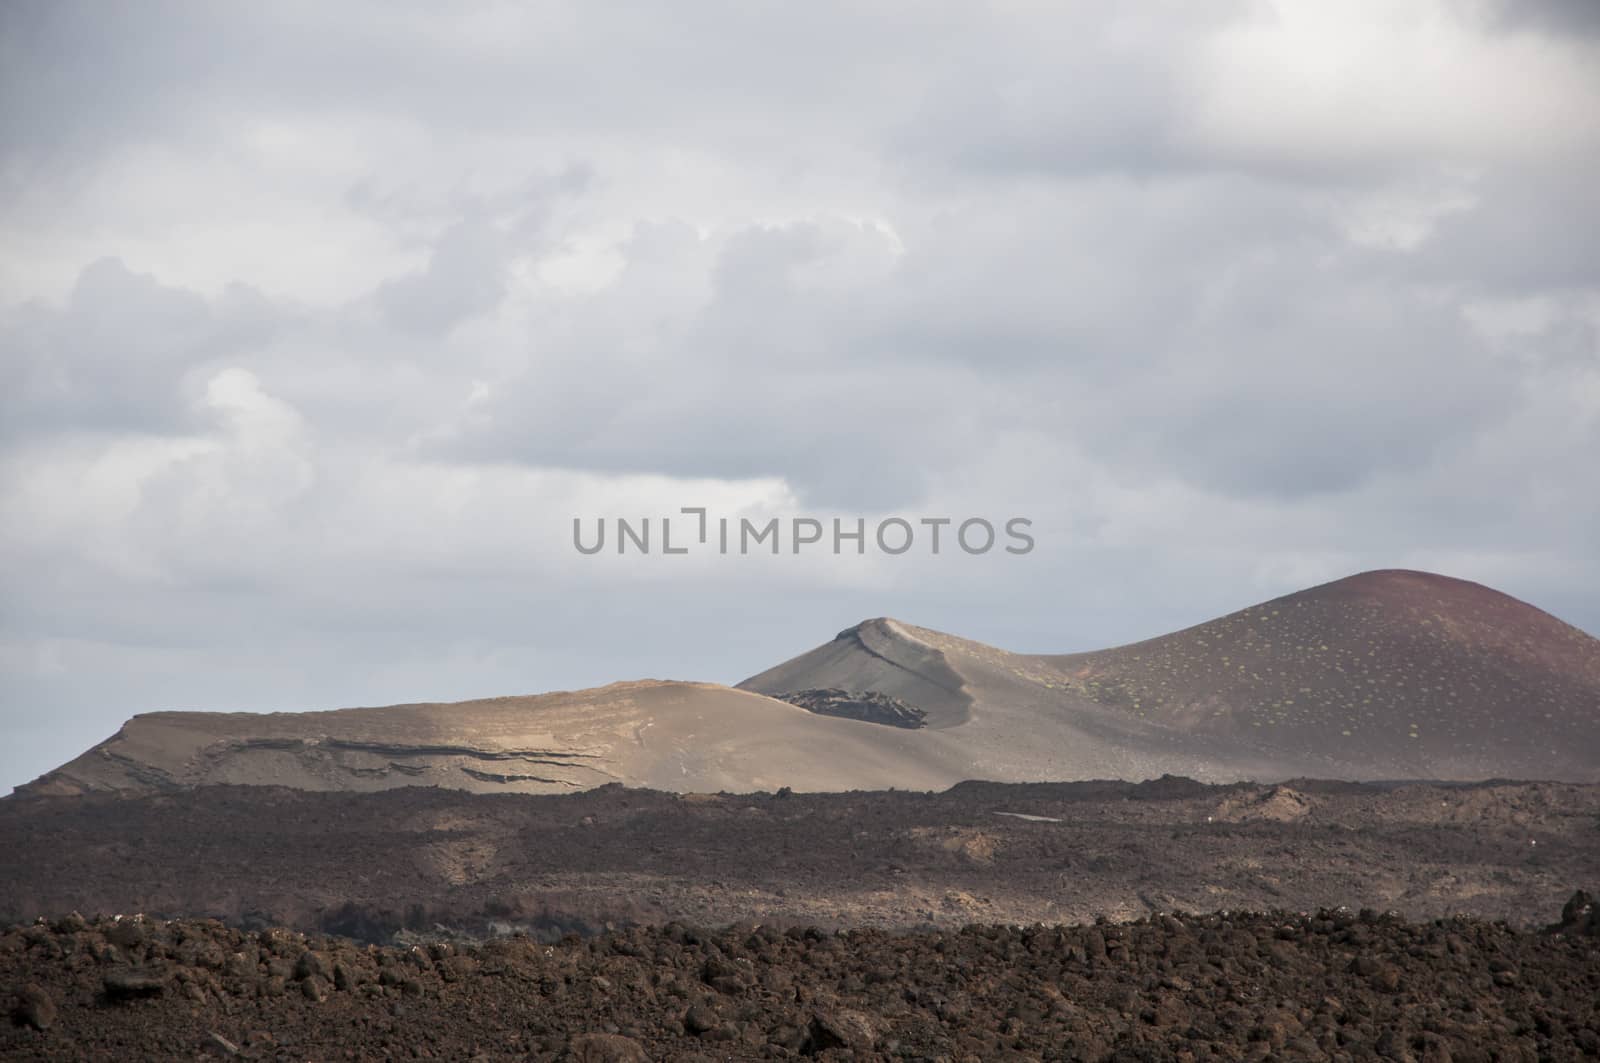 alien landscape of Lanzarote where we observe the stone desert